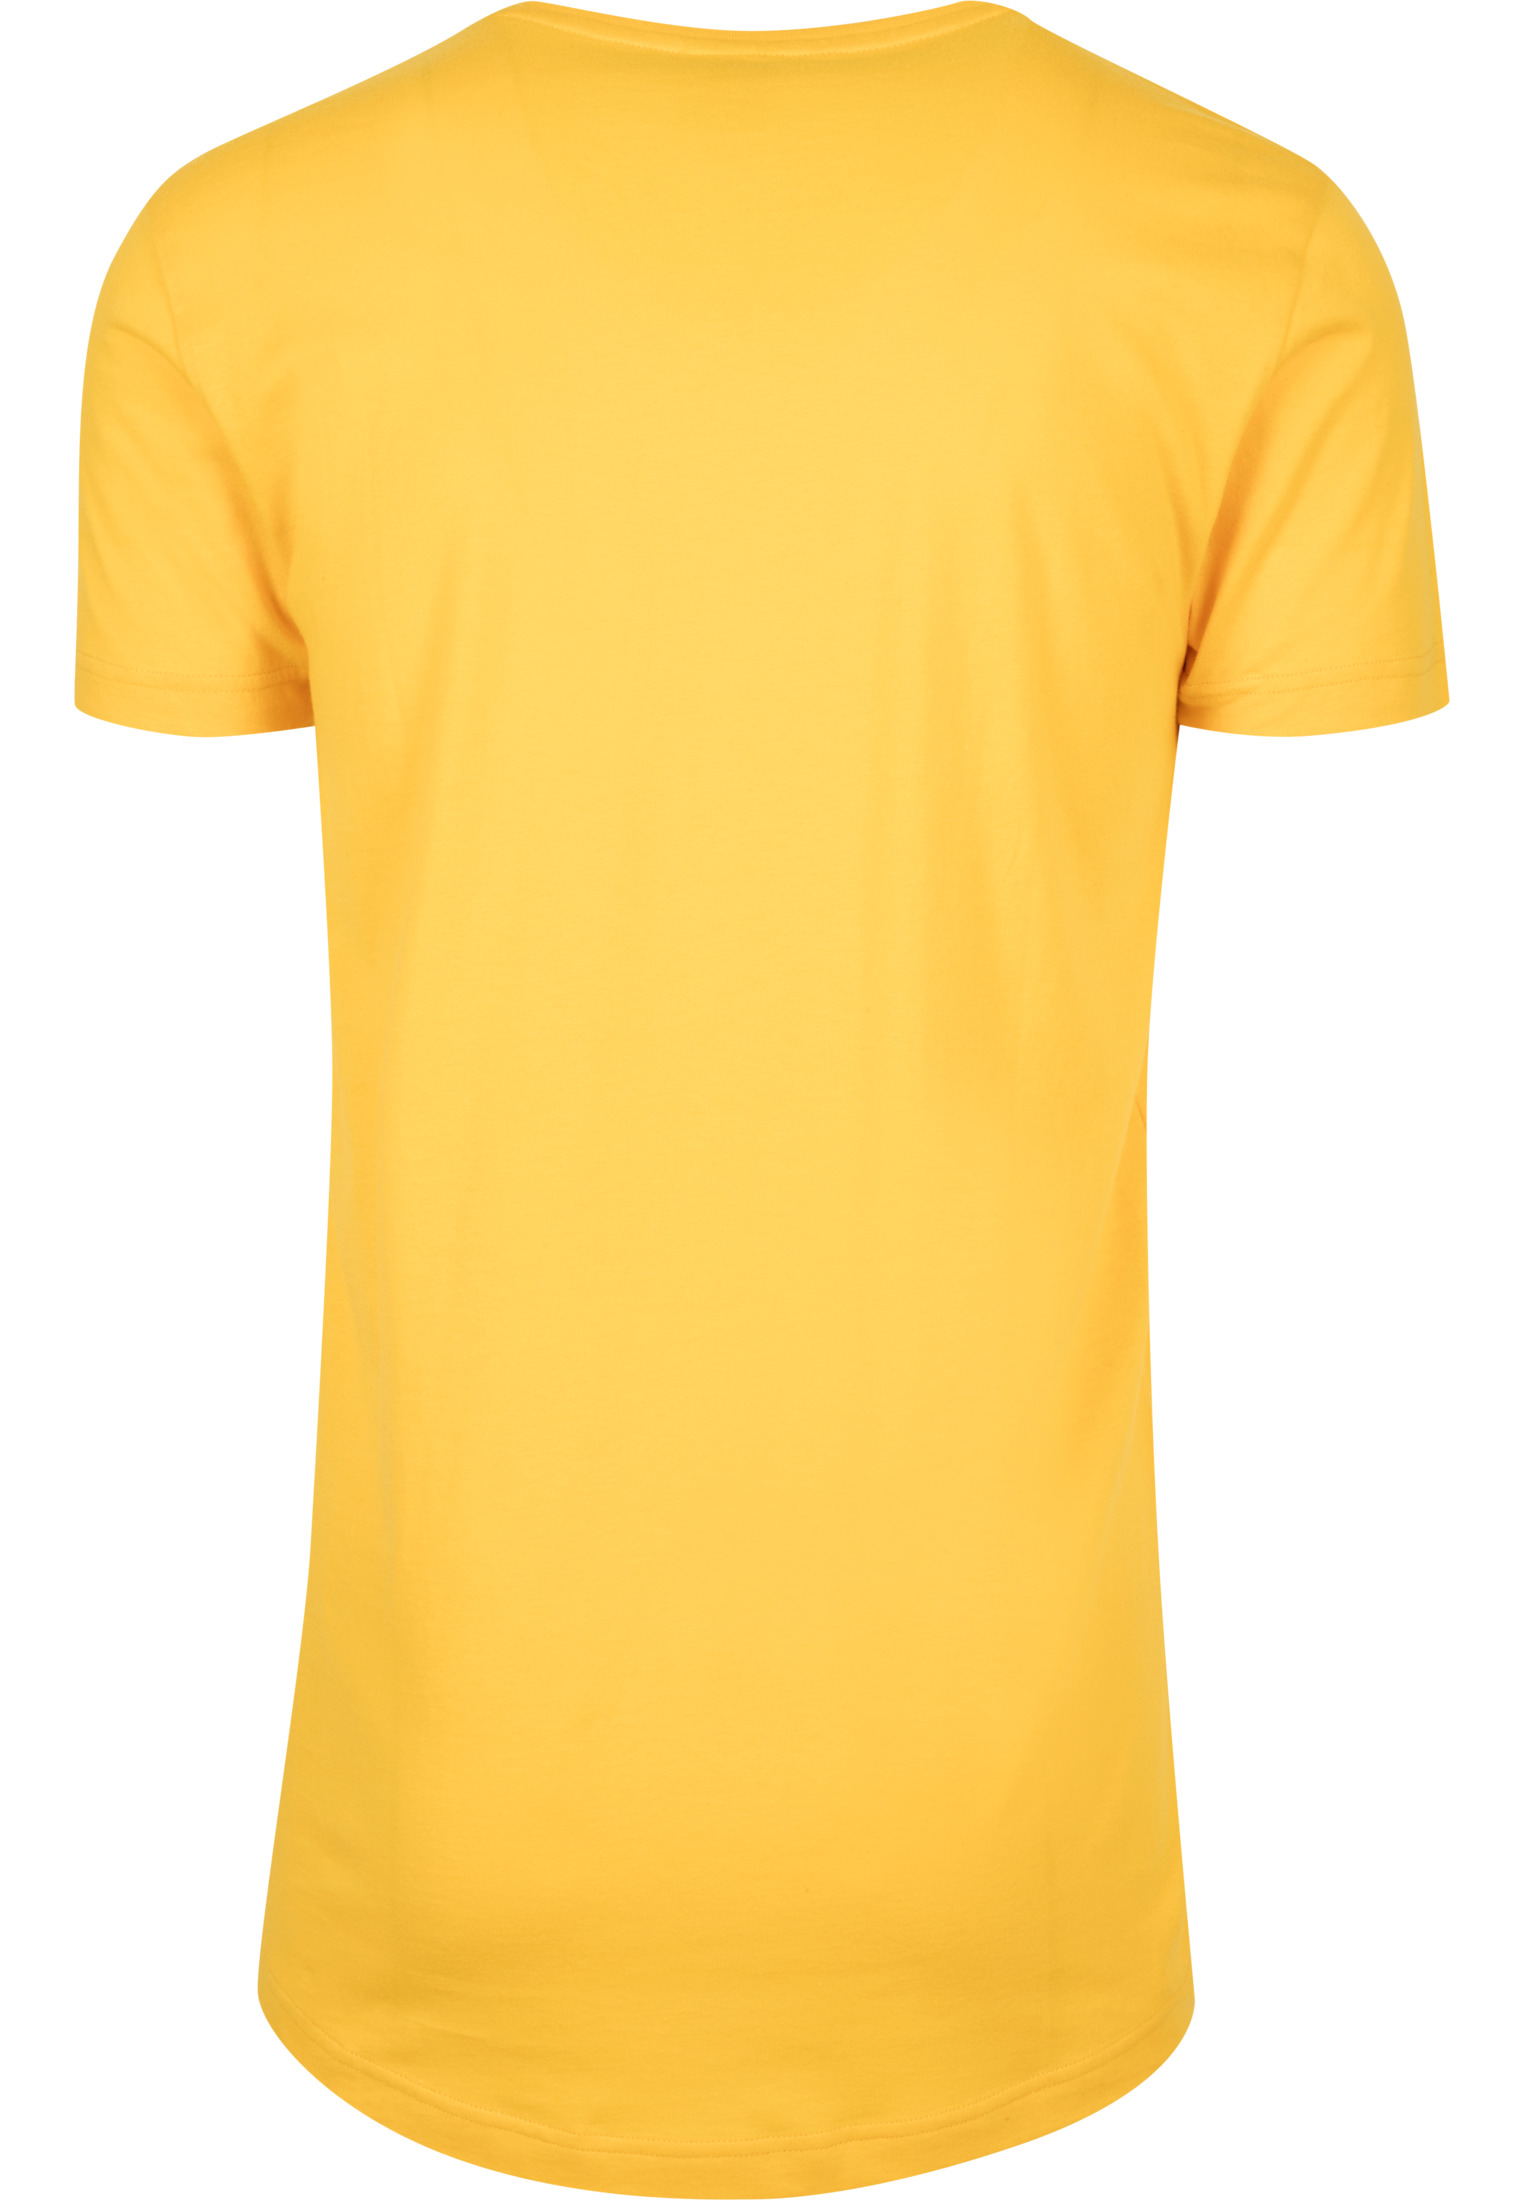 URBAN CLASSICS Shaped Long Tee T-Shirt (ABVERKAUF) chromgelb M